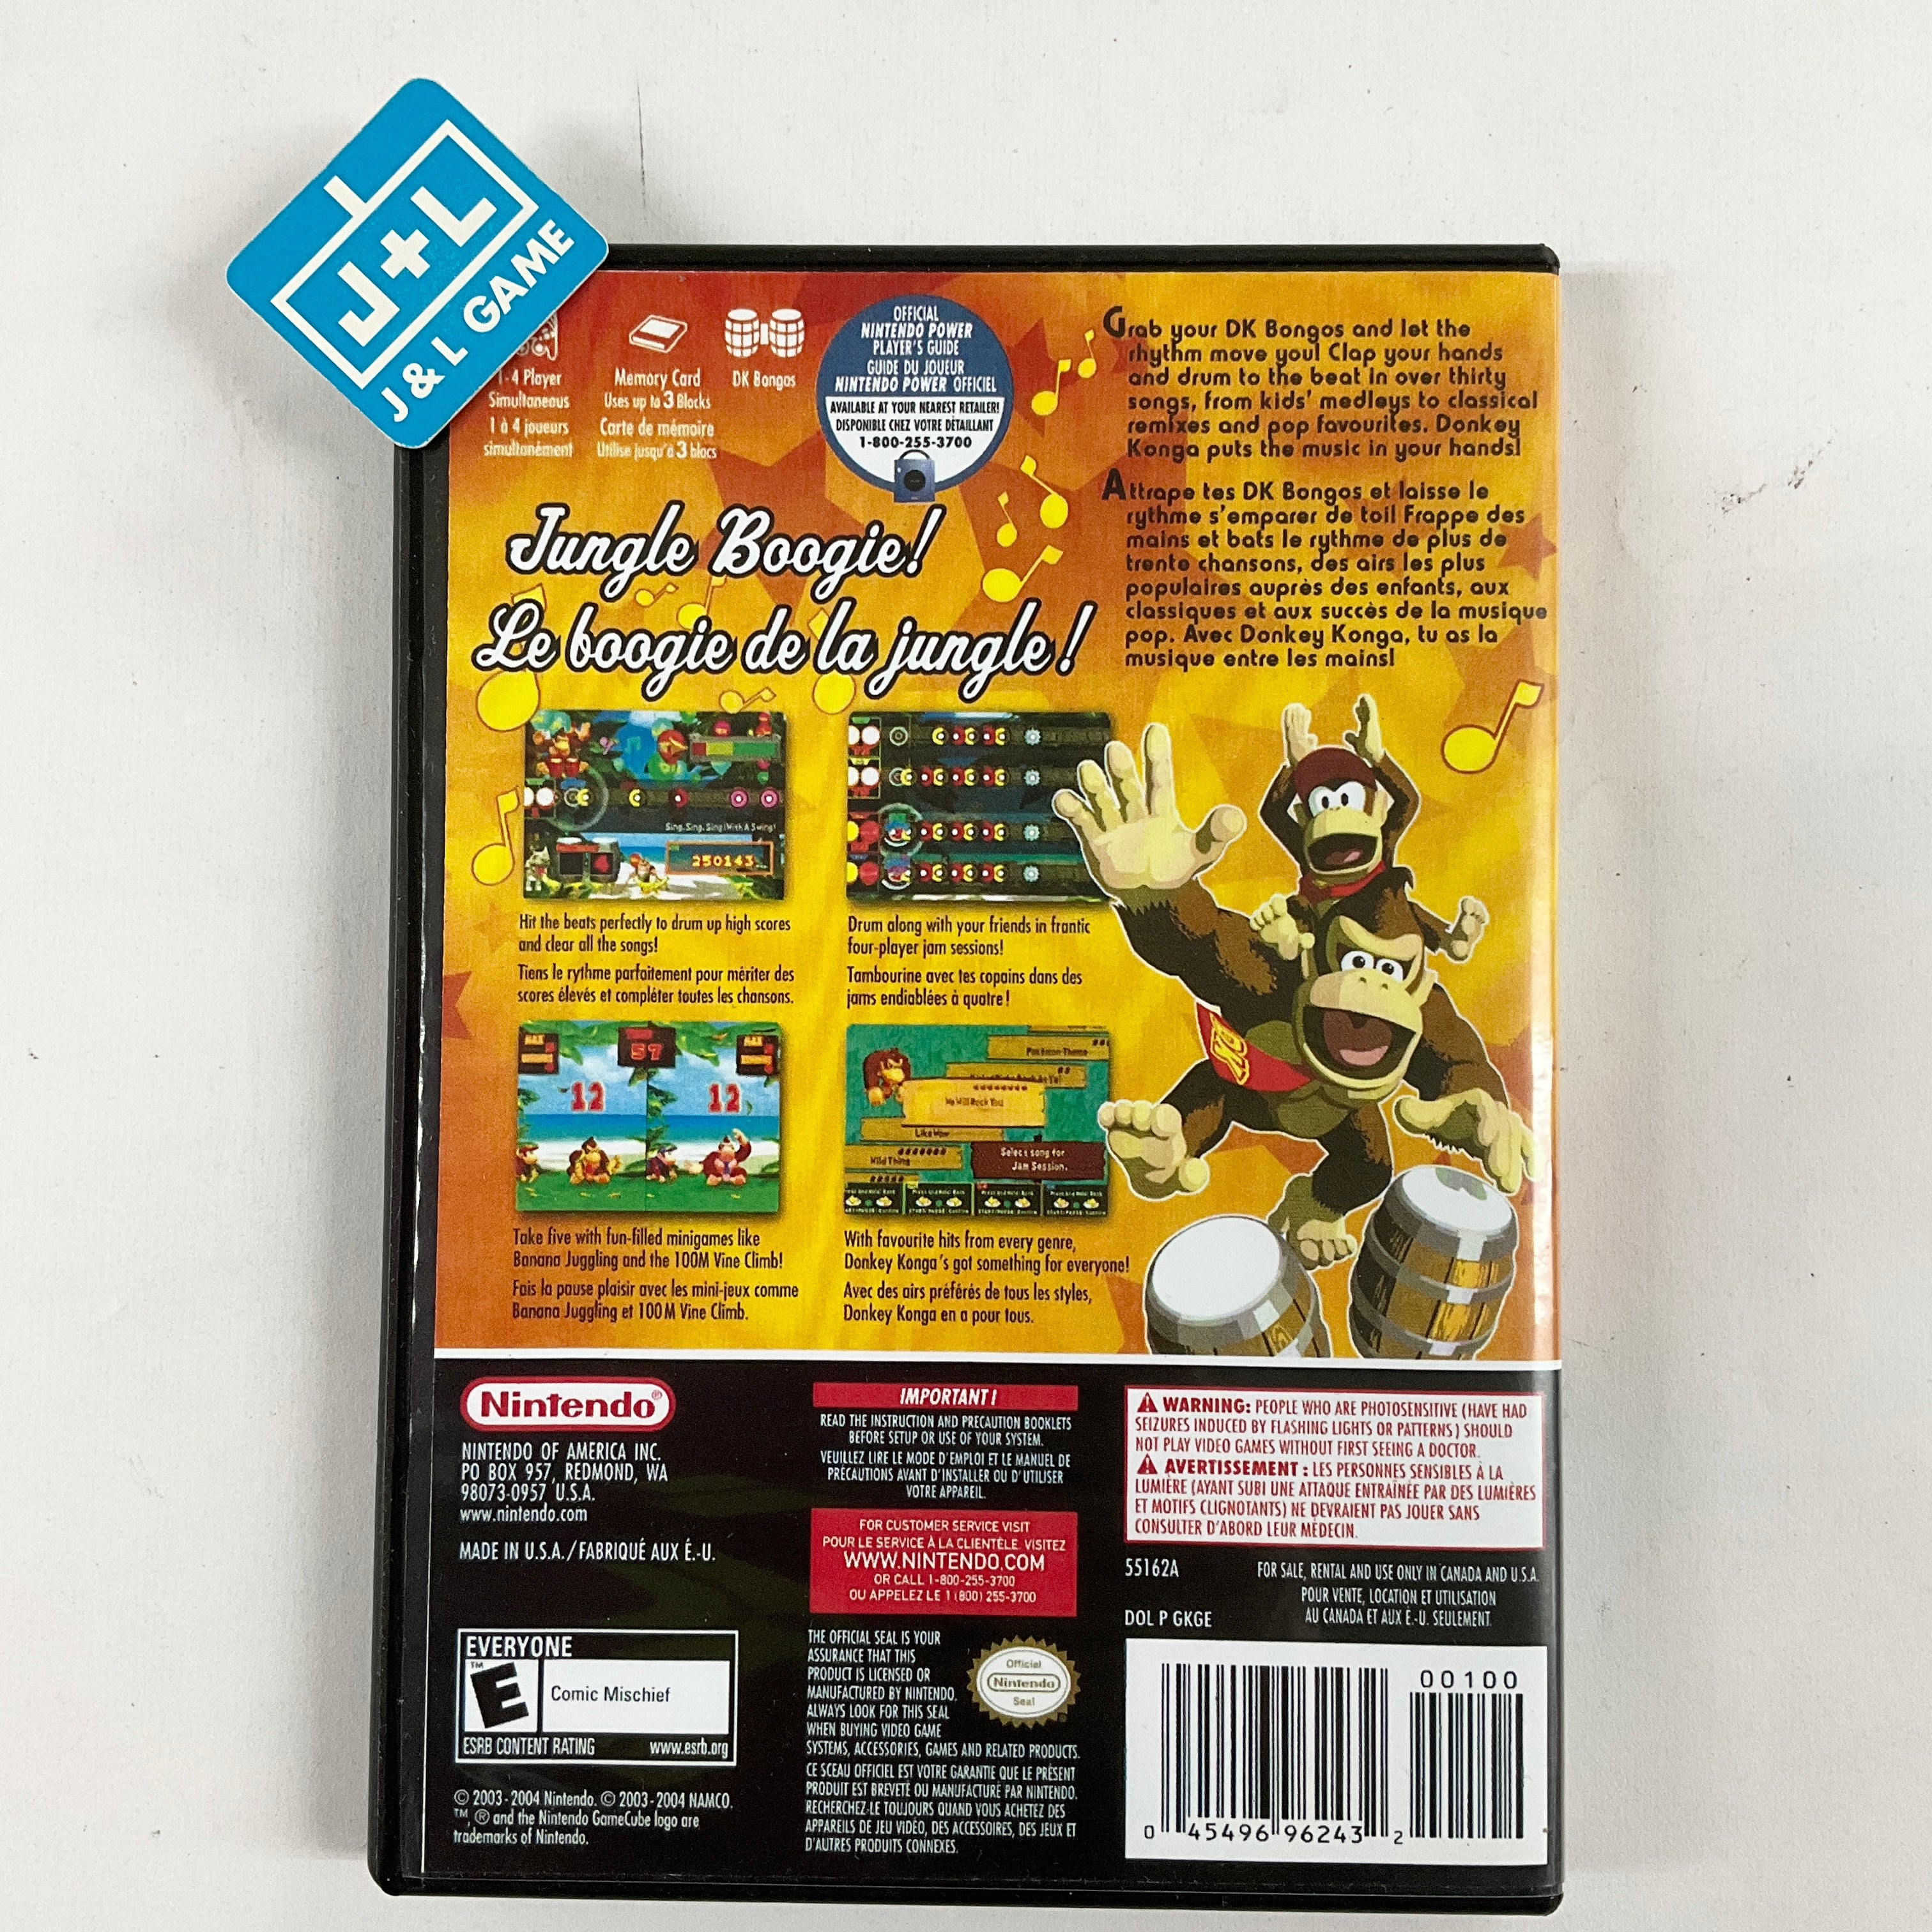 Donkey Konga - (GC) GameCube [Pre-Owned] Video Games Nintendo   